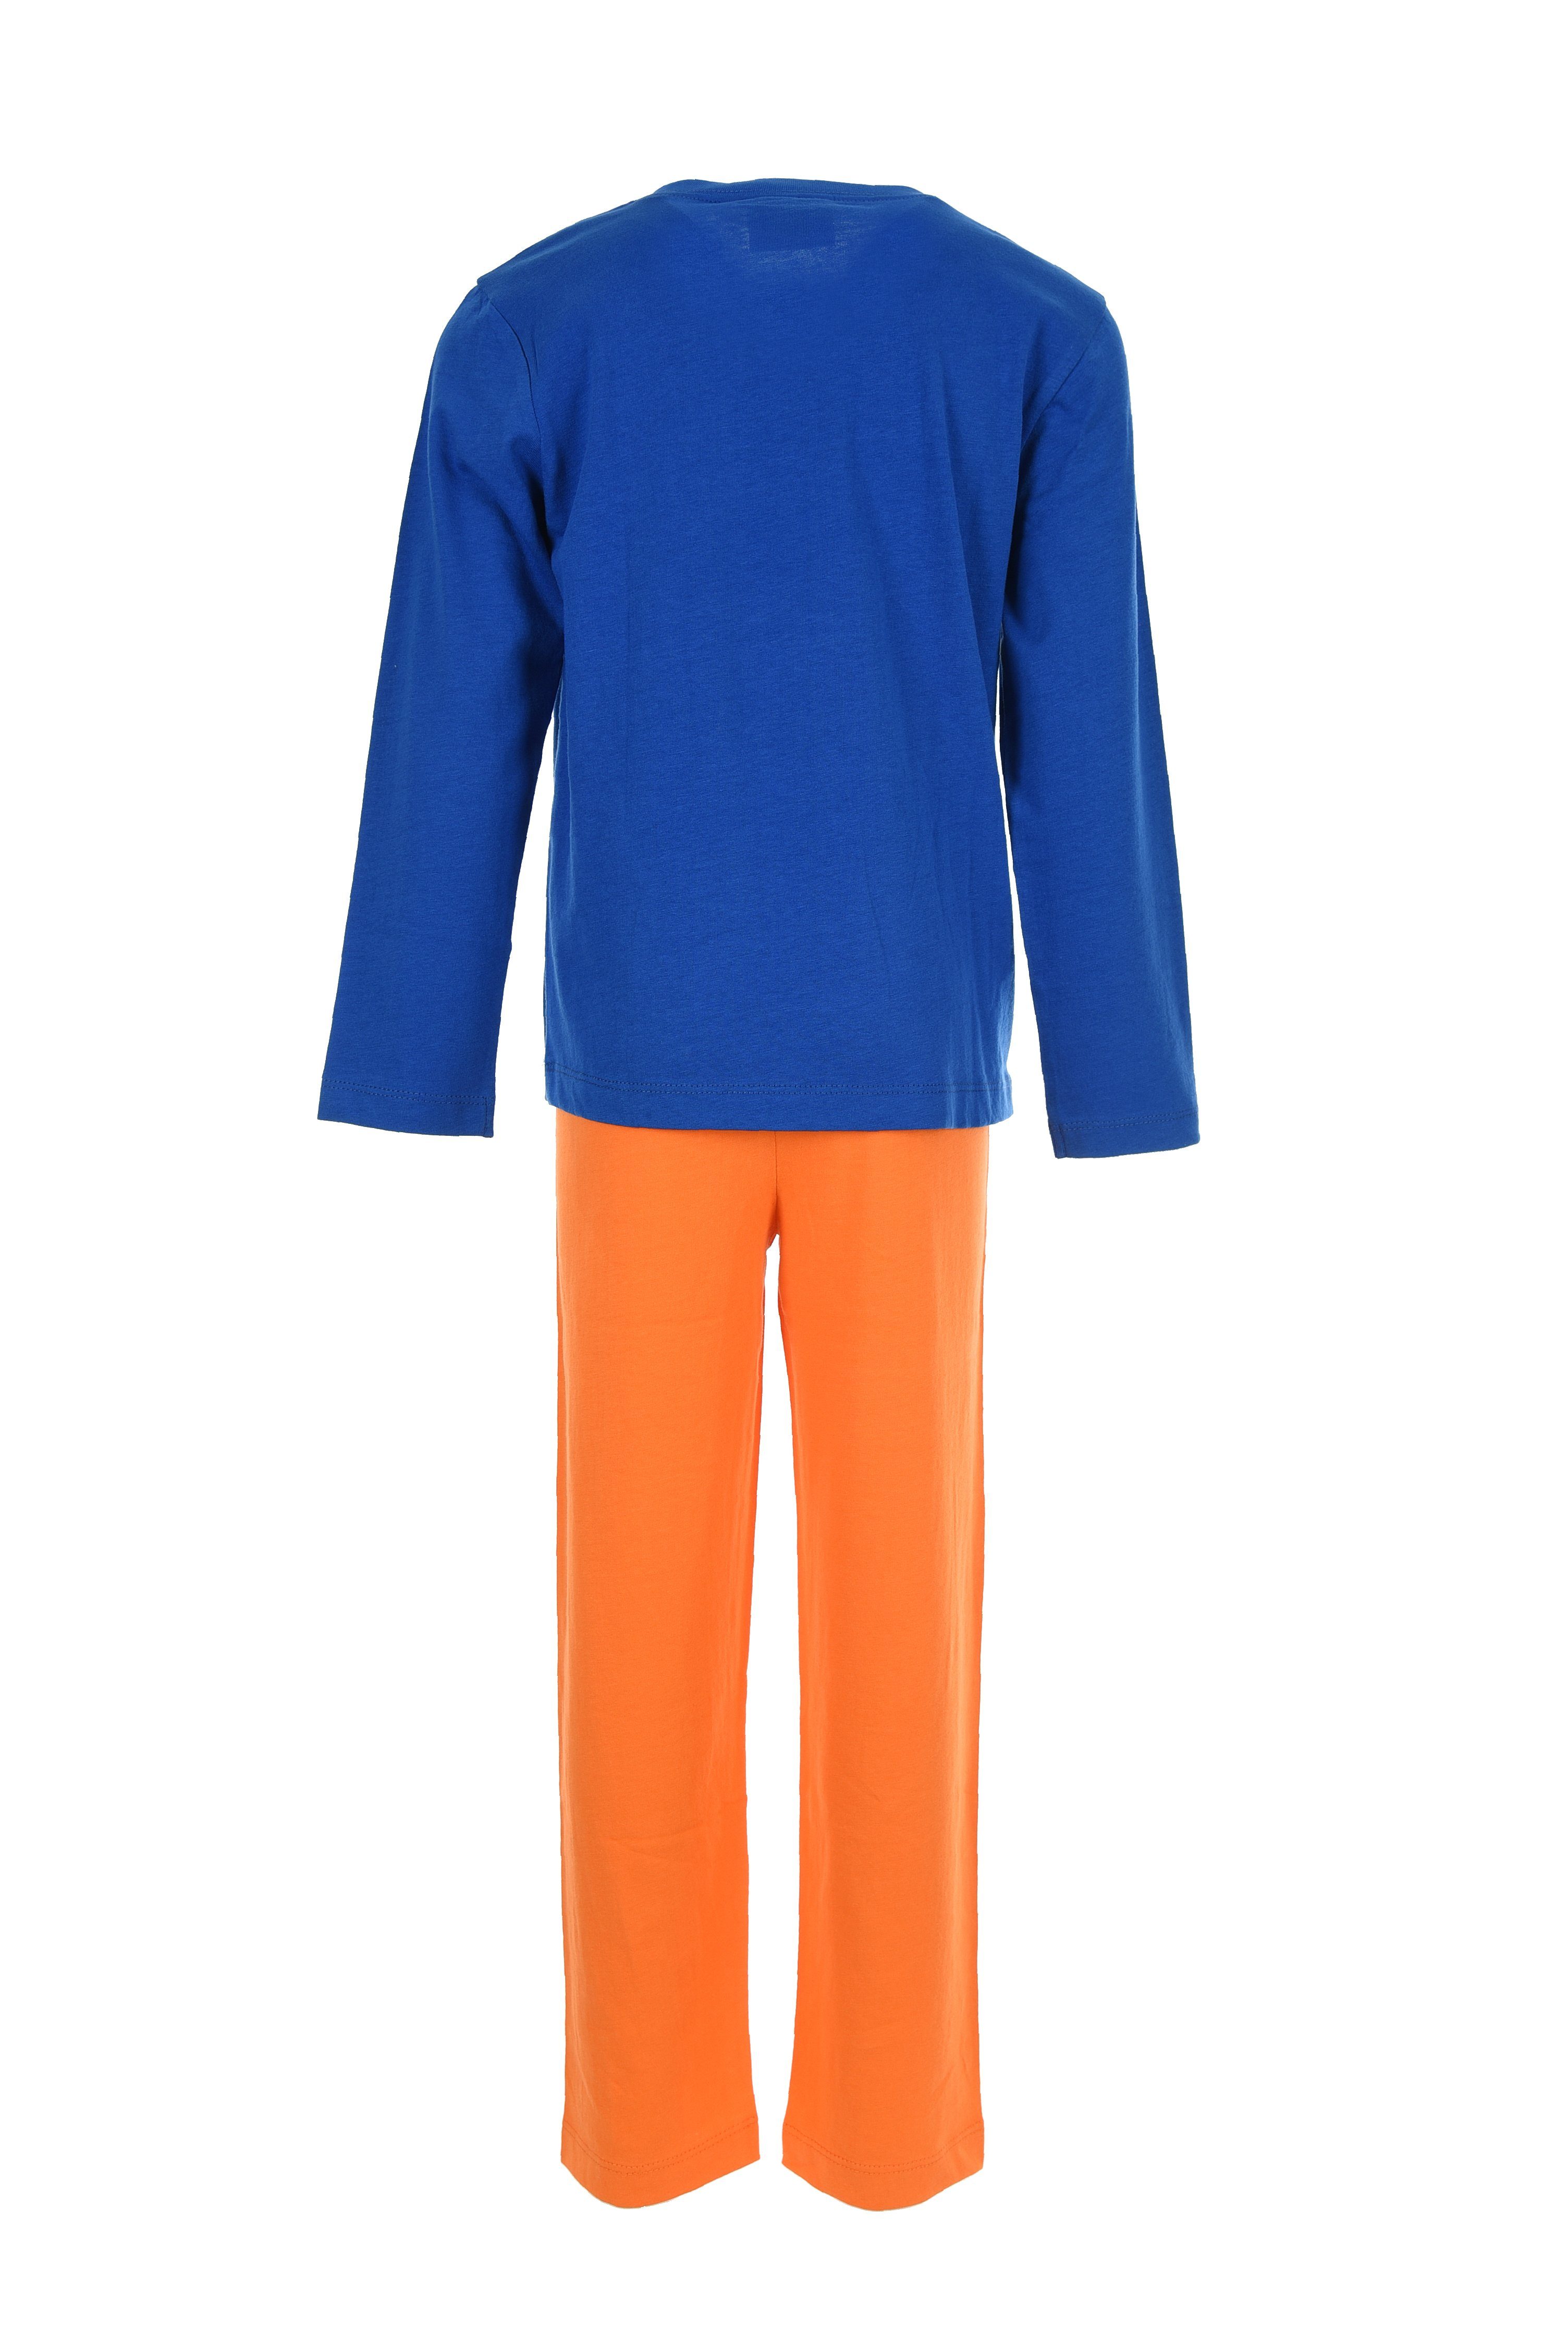 PAW Paw langarm Blau-Orange Schlafanzug Schlafanzug Patrol PATROL Jungen